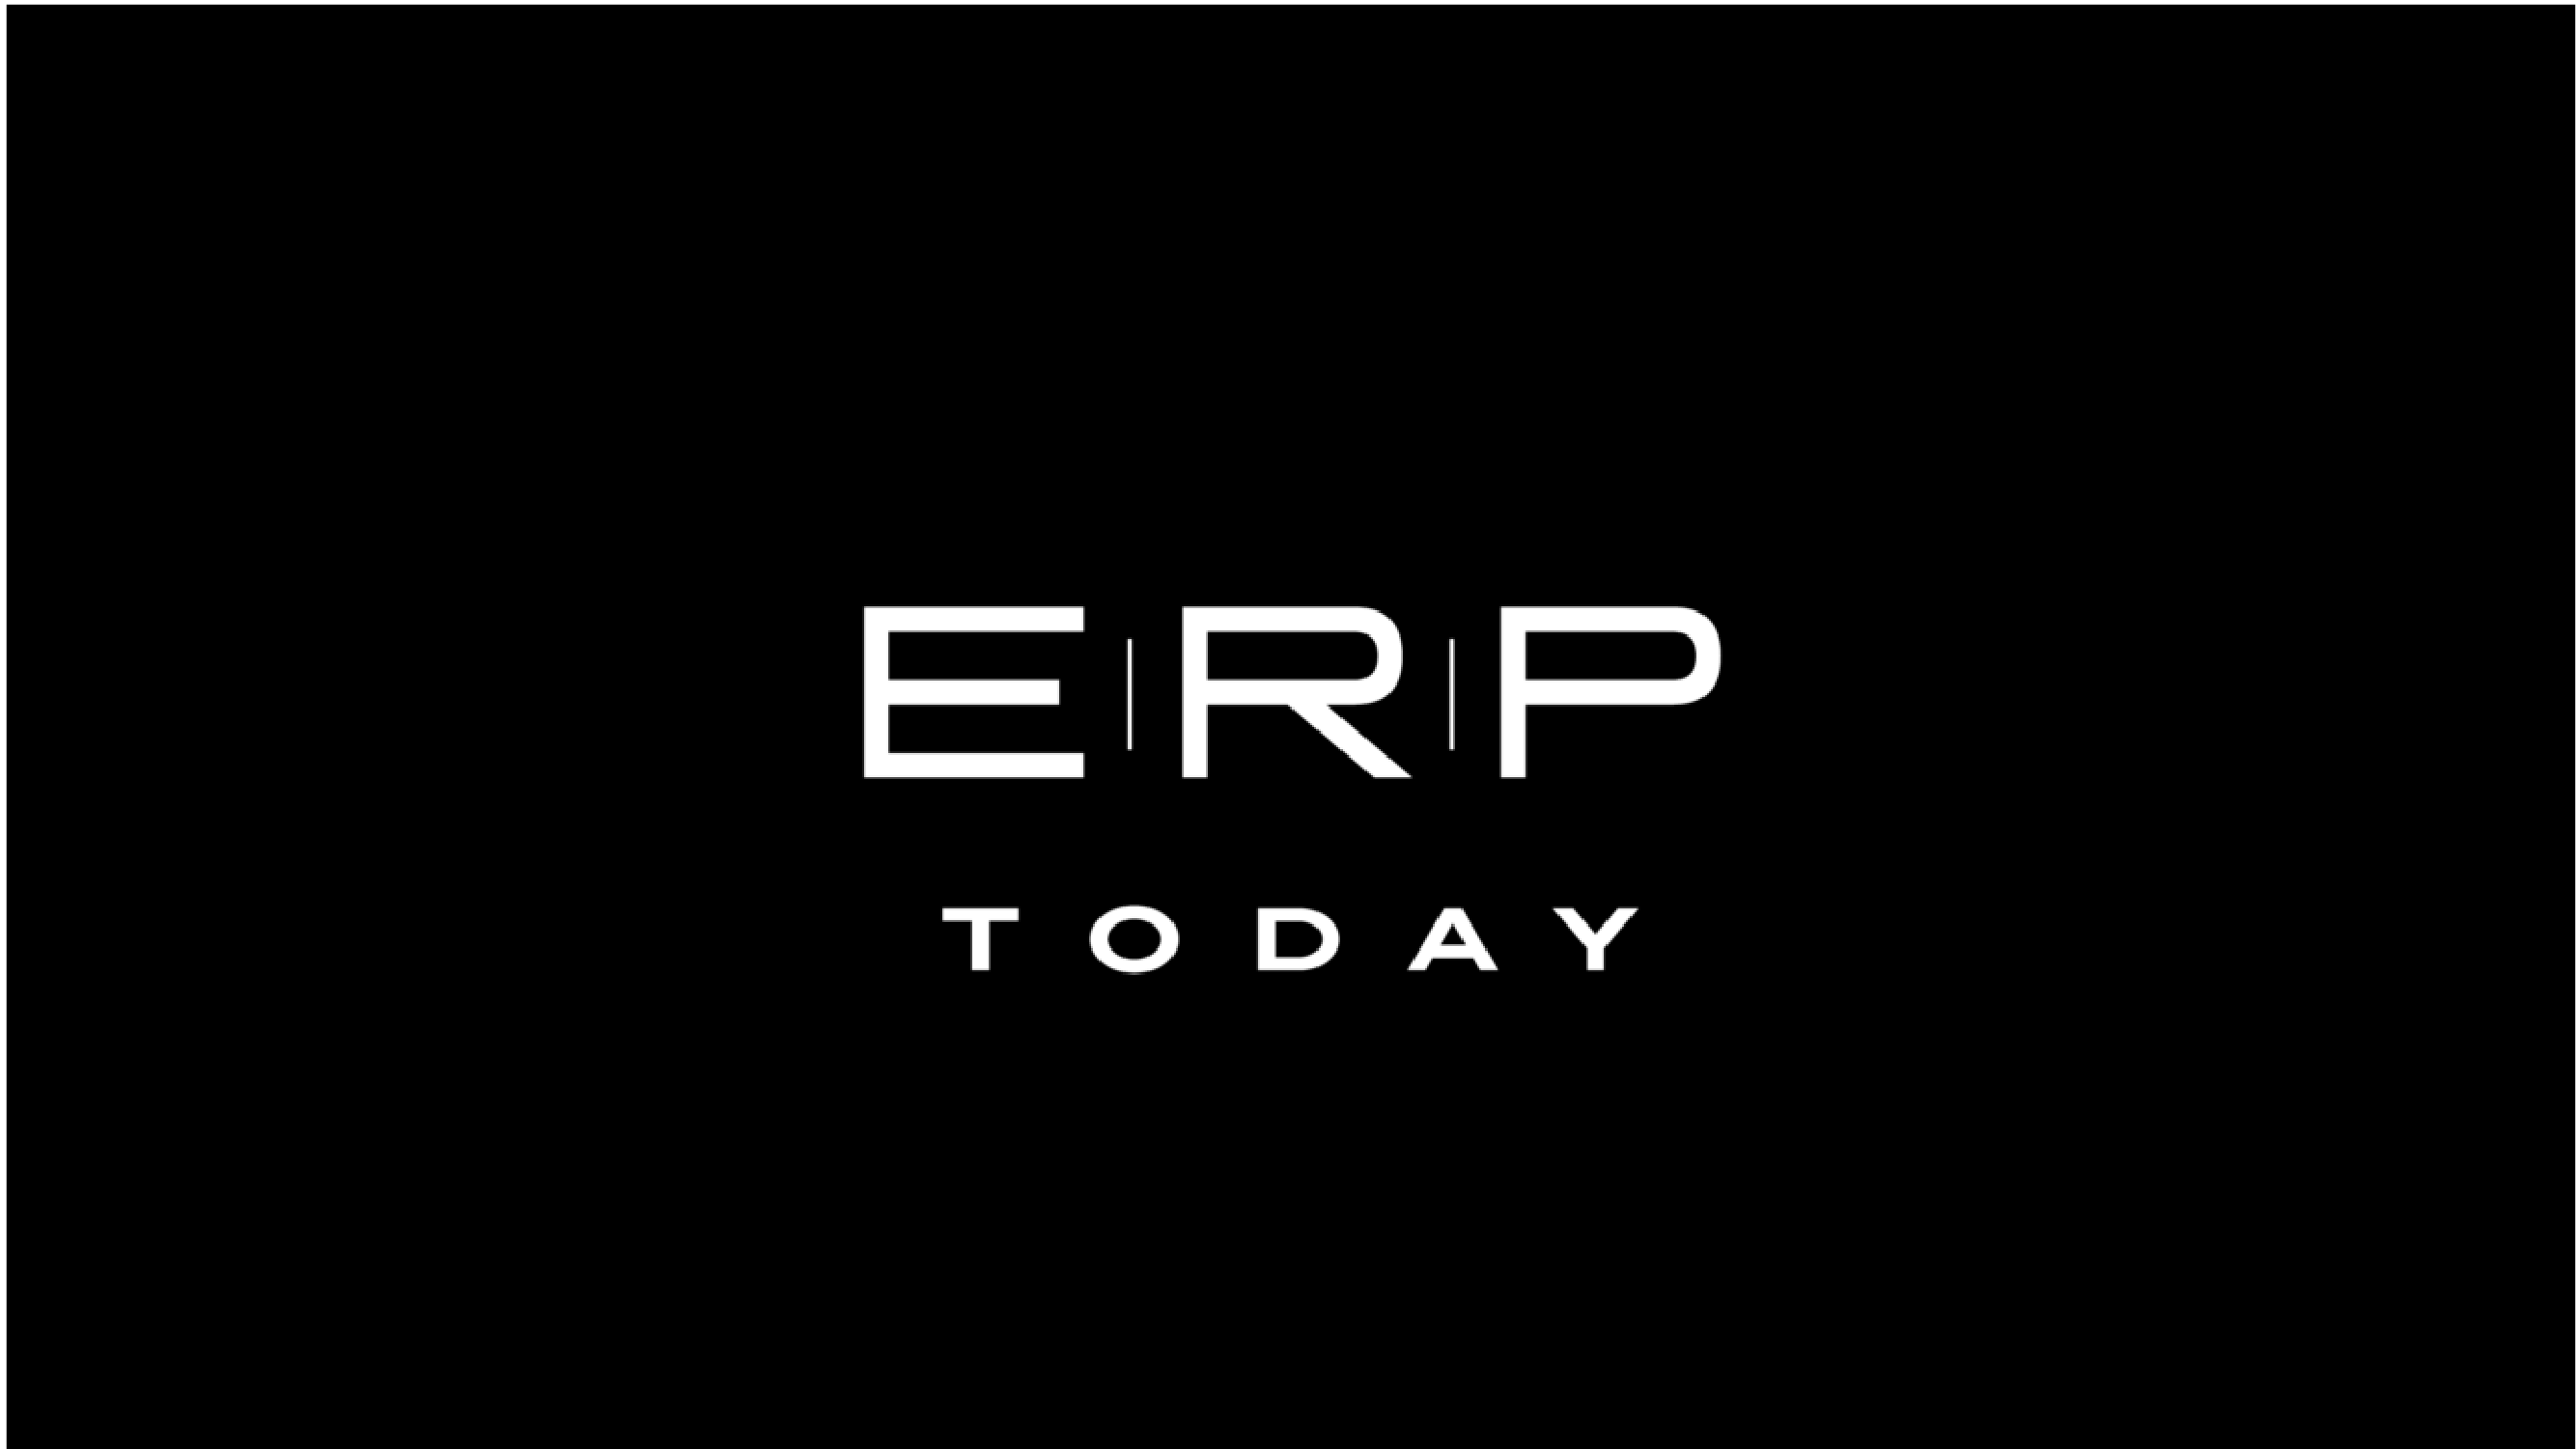 ERP Today